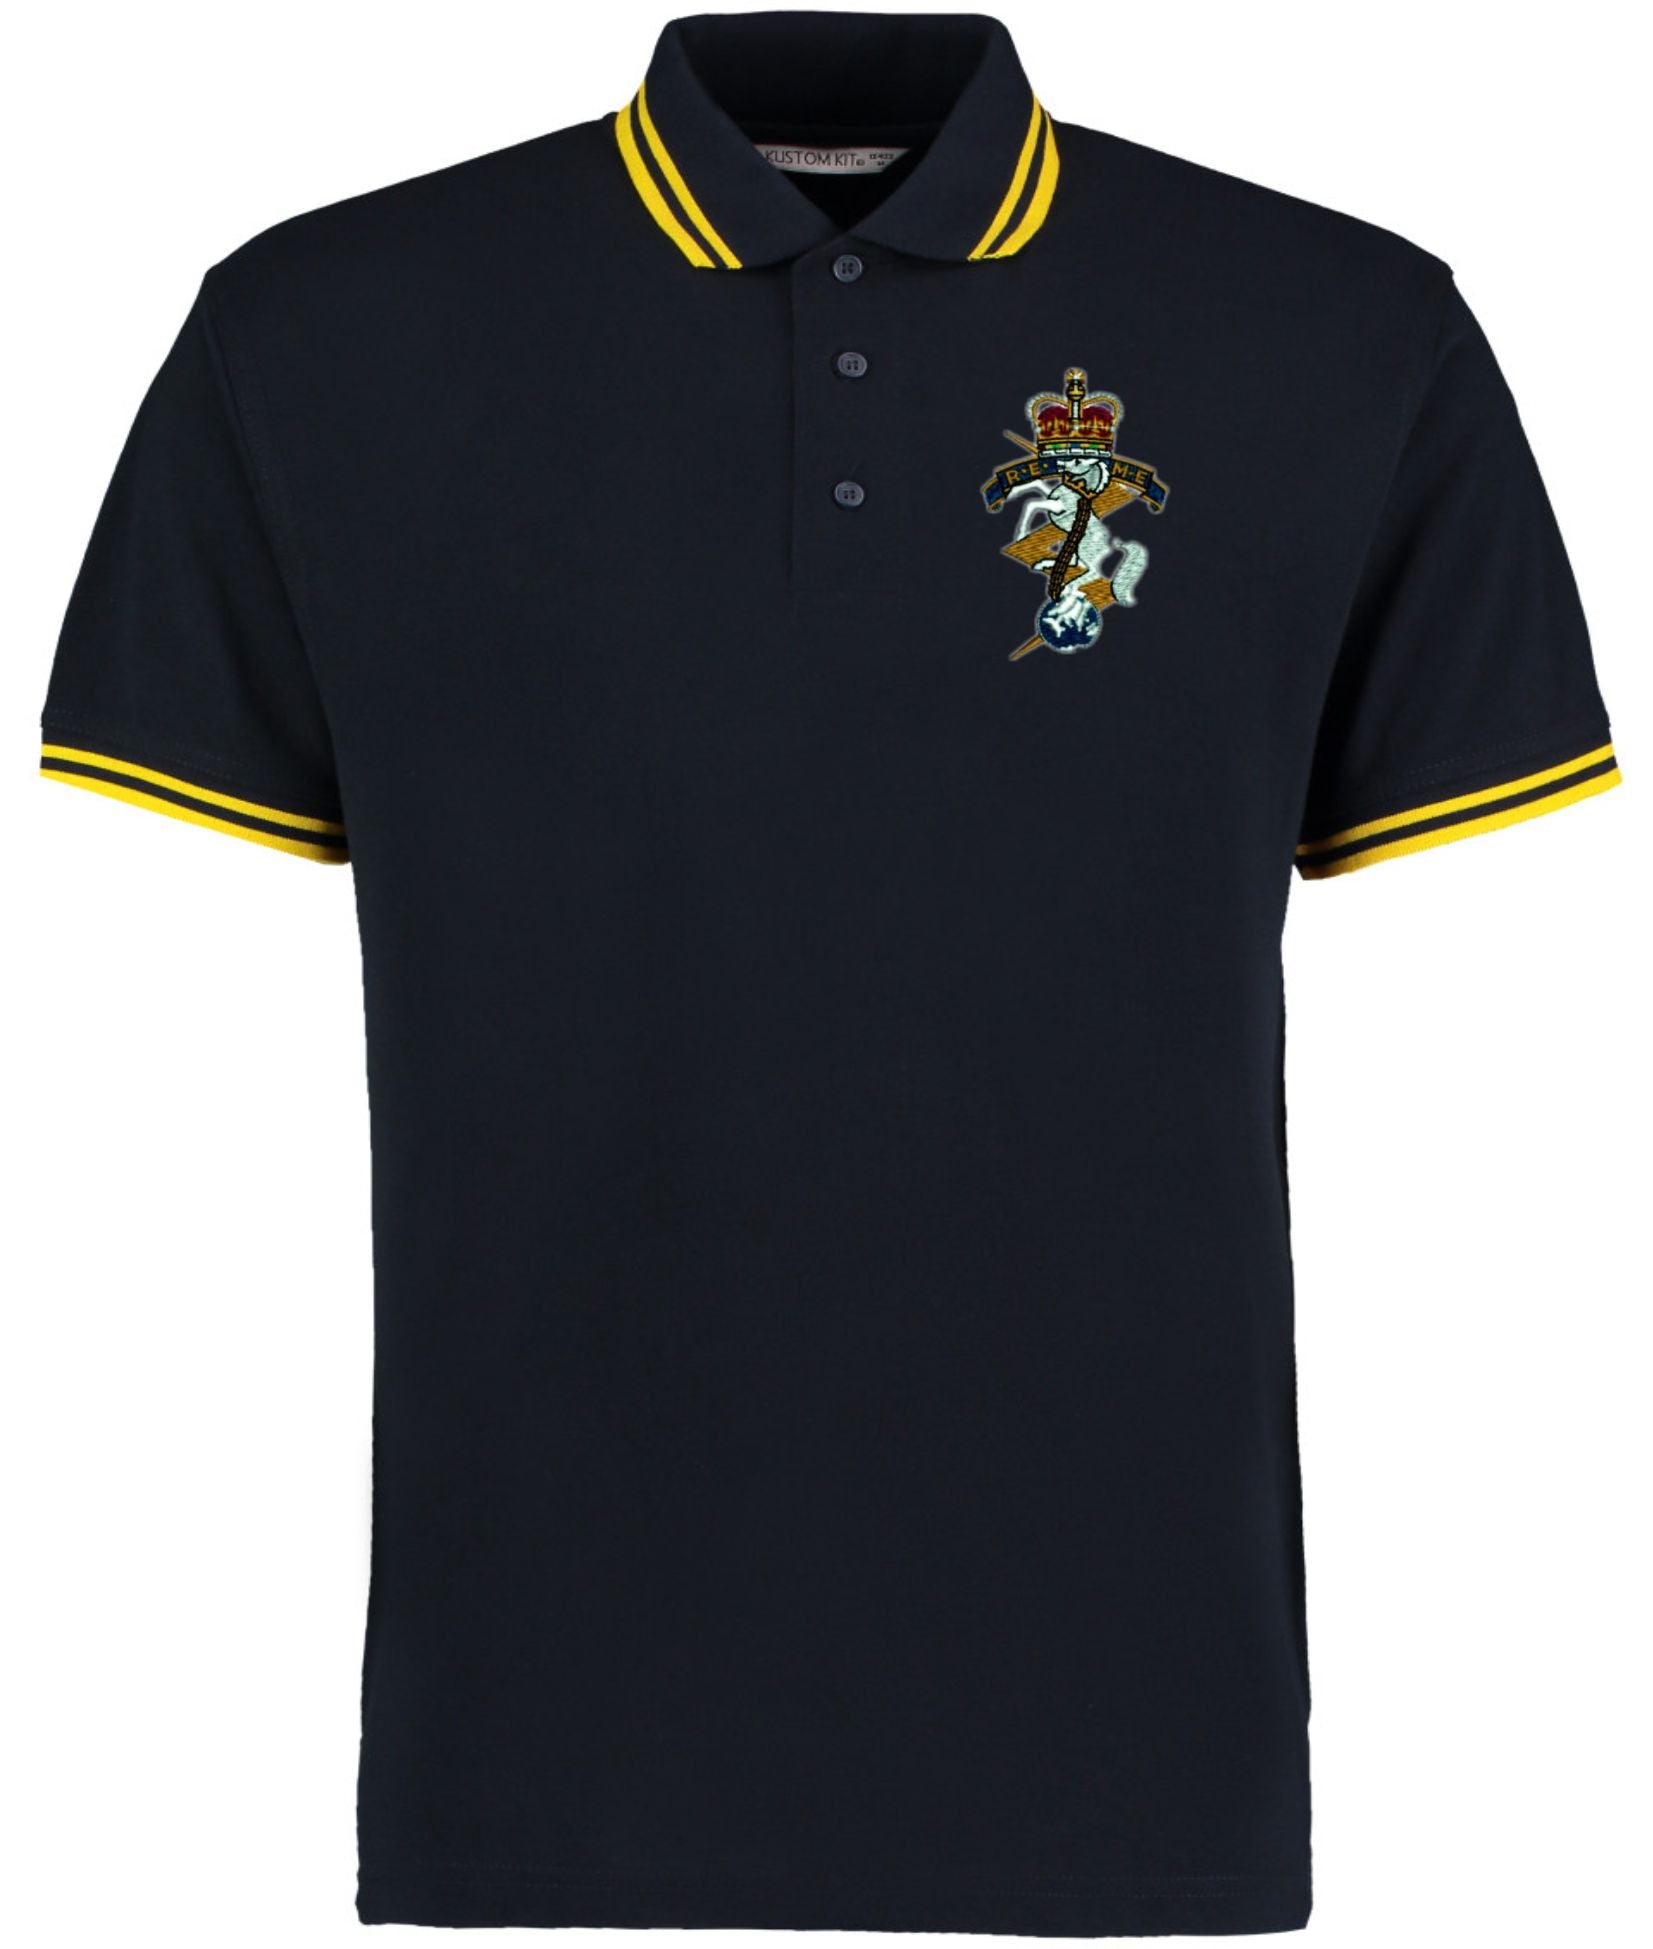 REME Sports Polo Shirt (Royal Electrical & Mechanical Engineers)